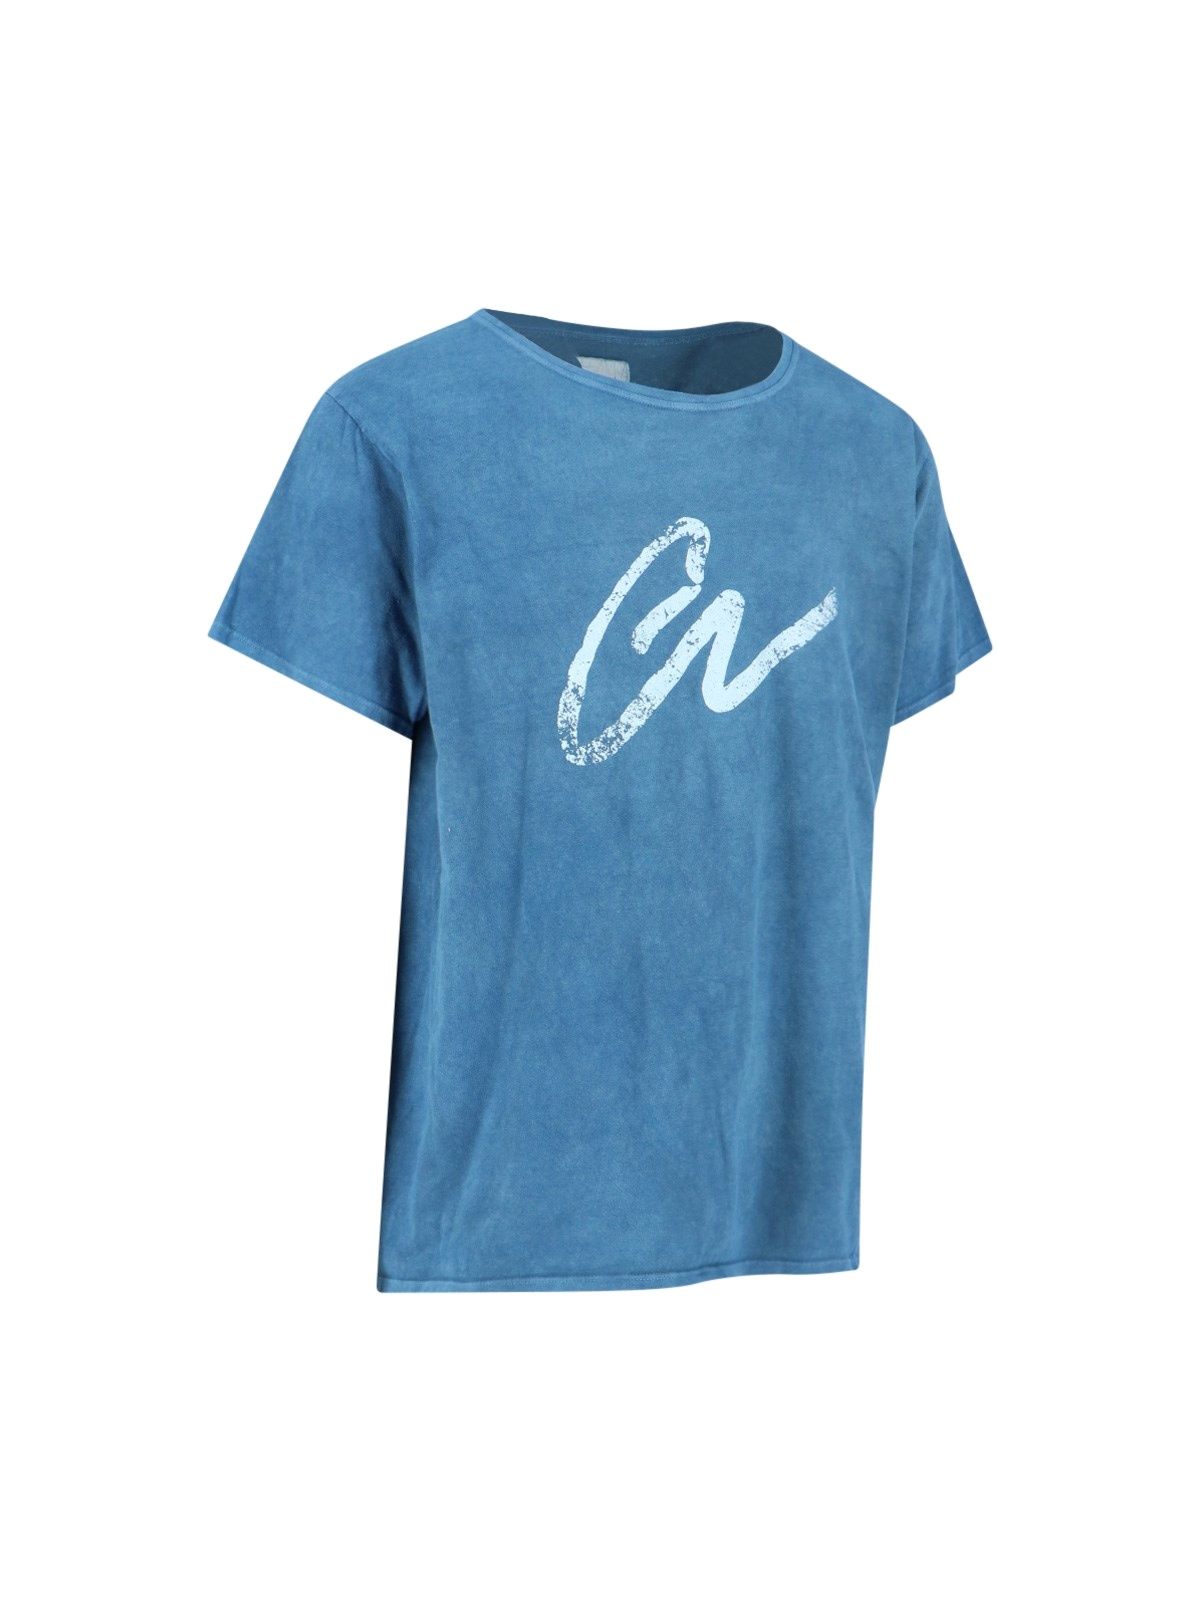 T-shirt stampa "GL"